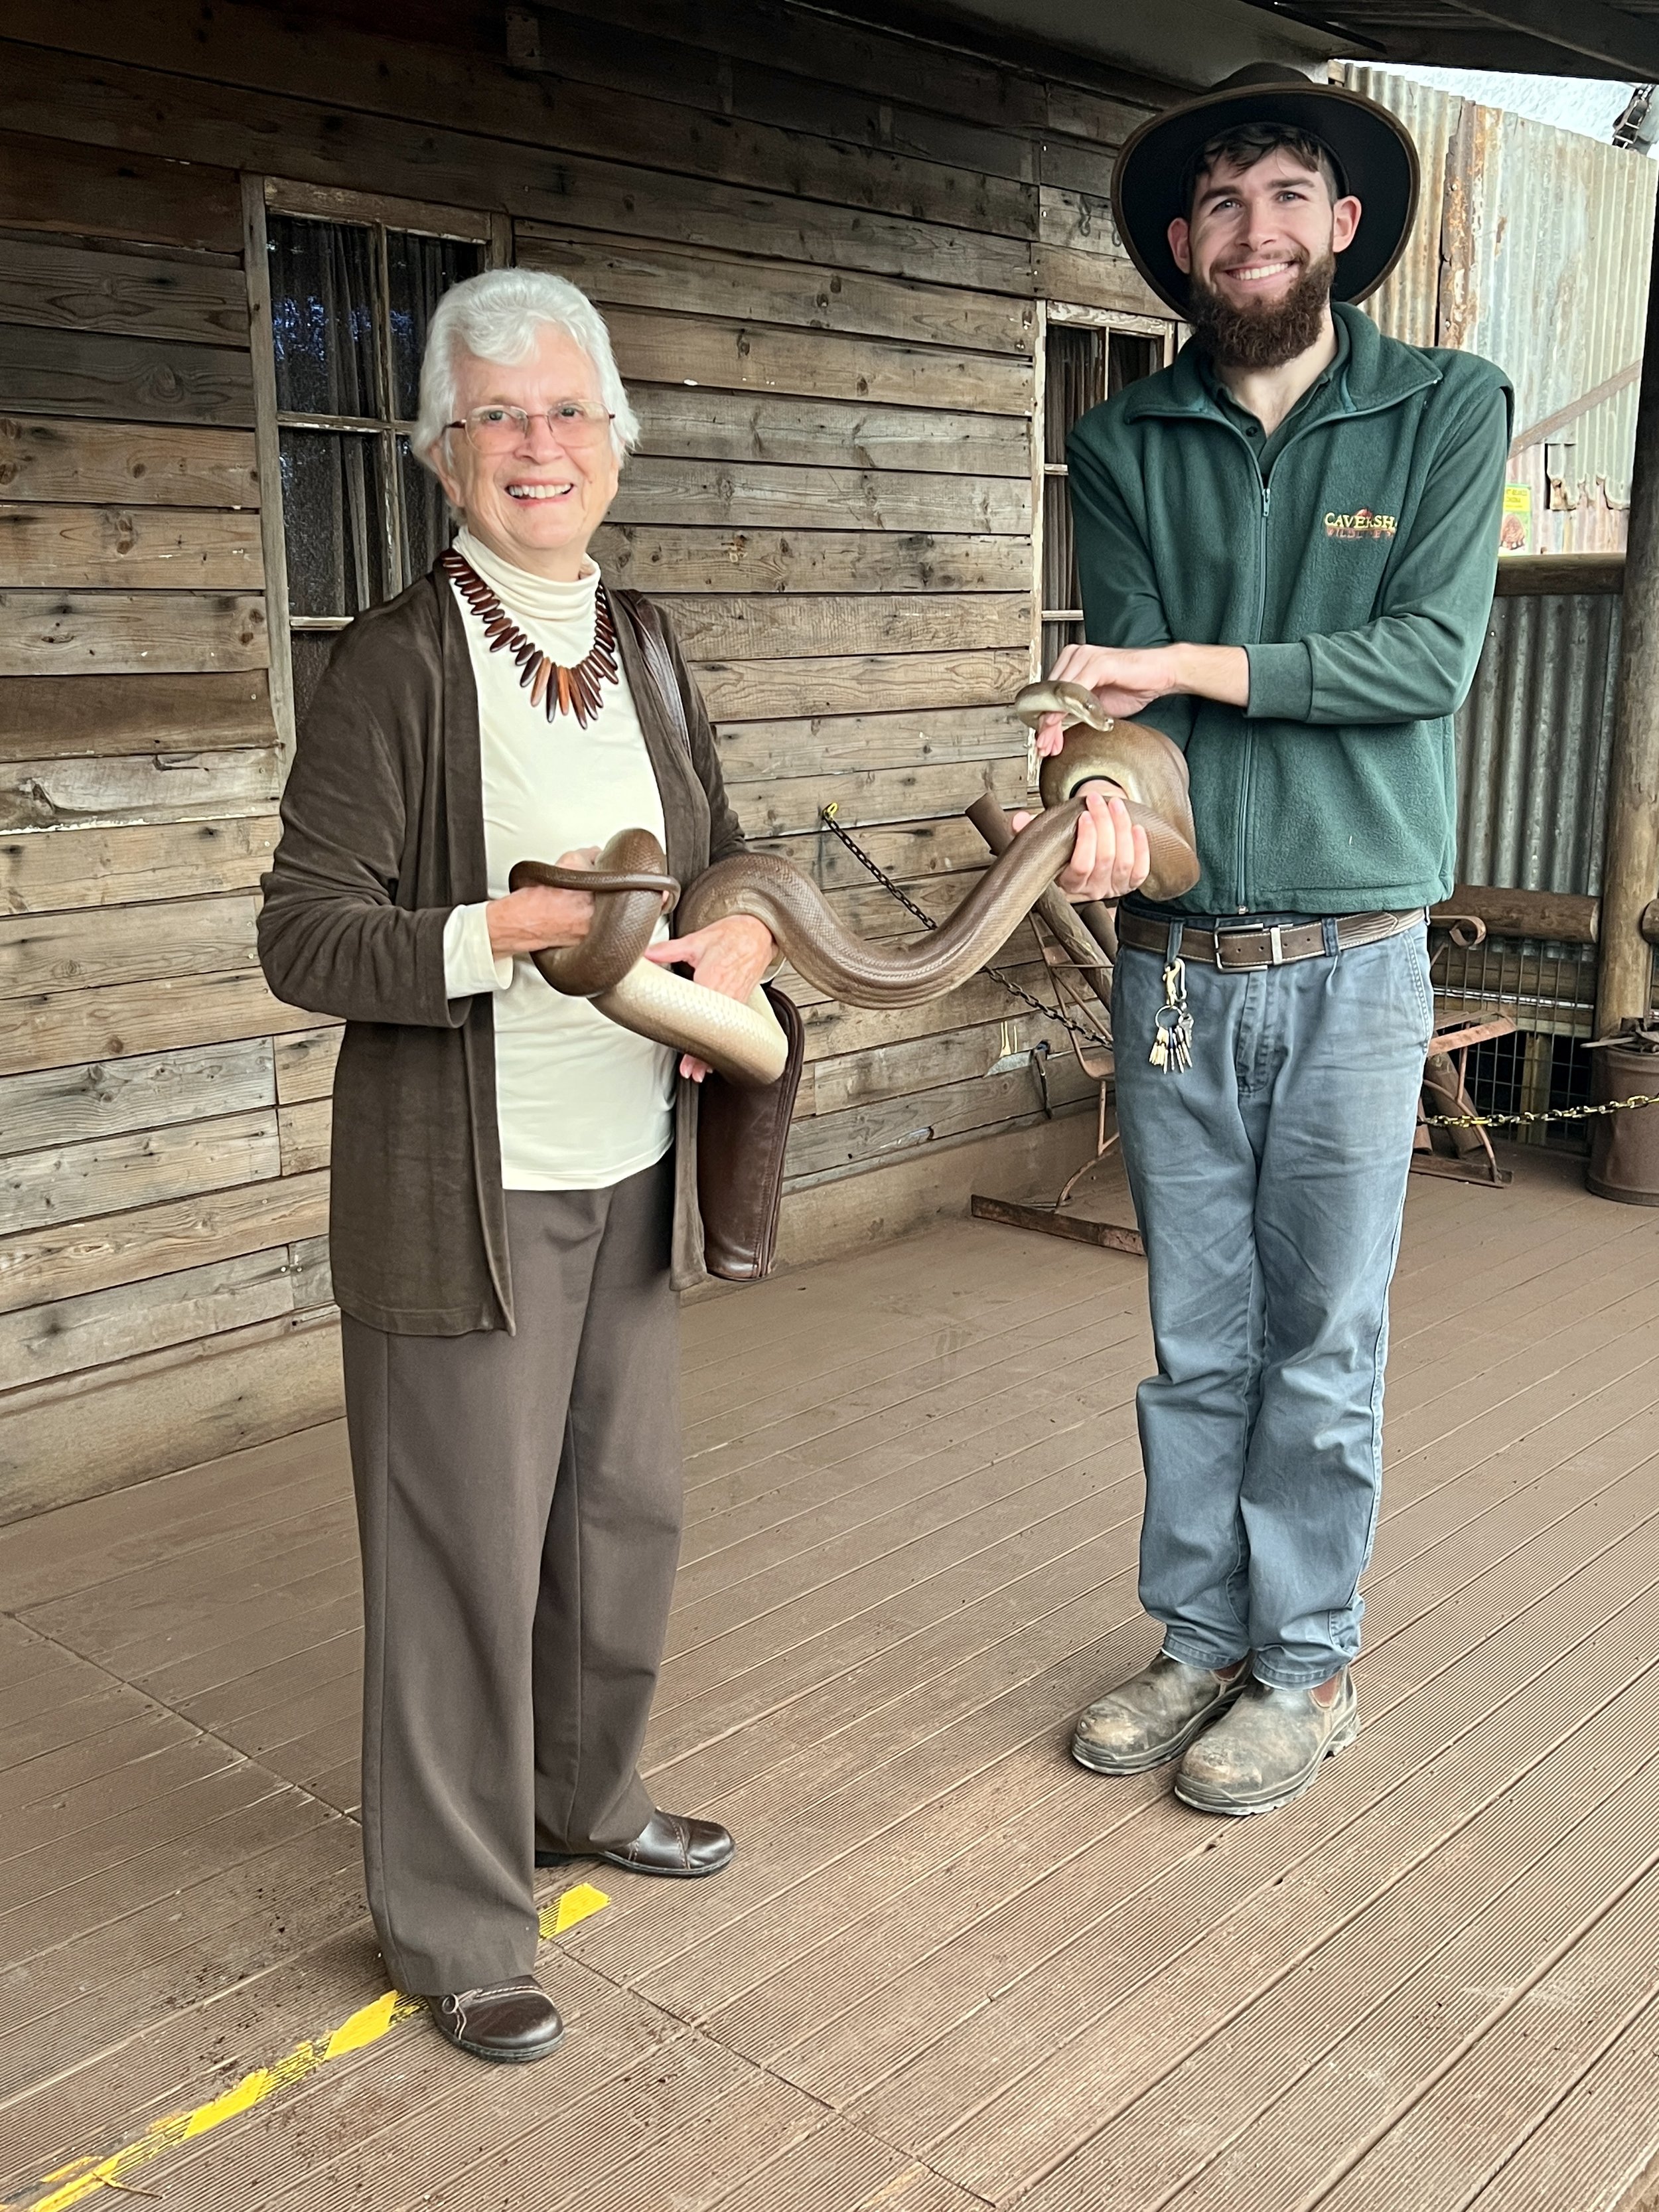 Friendly snake and my Mum